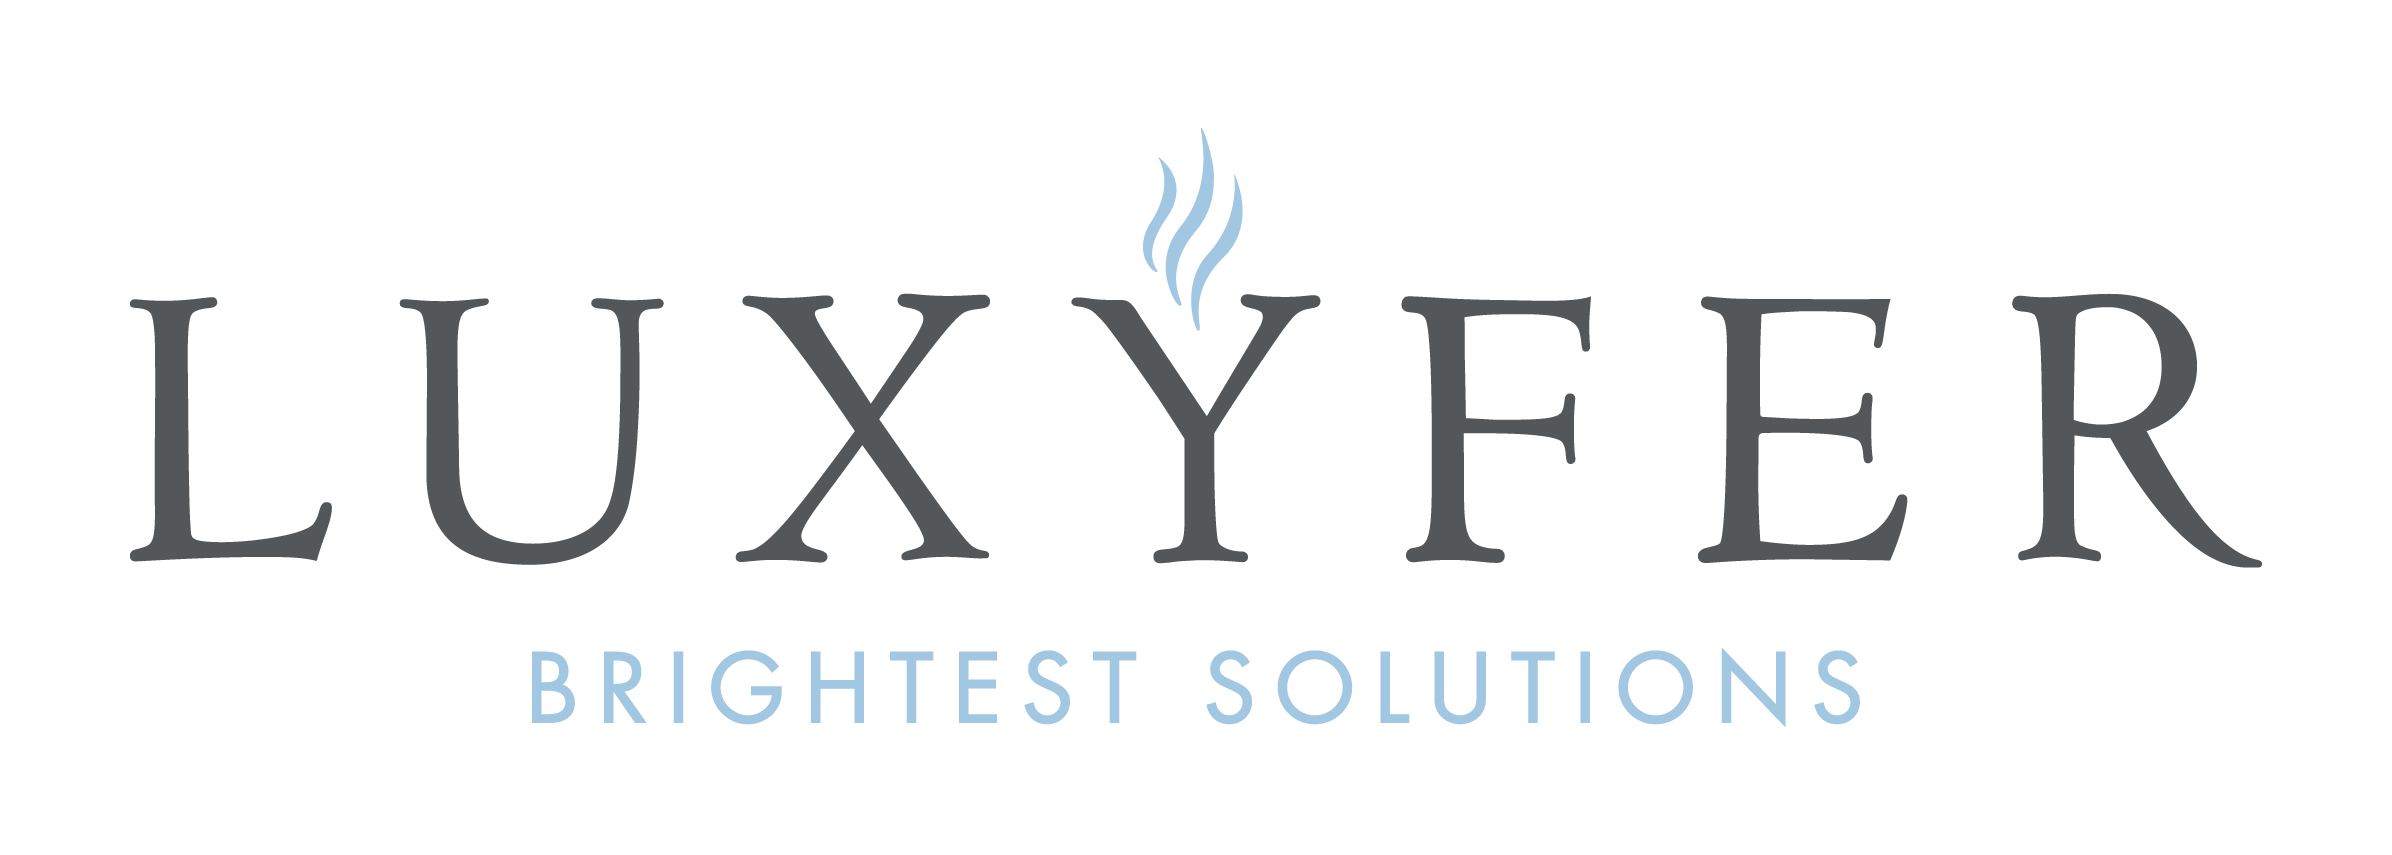 Logo Luxyfer Brightest Solutions